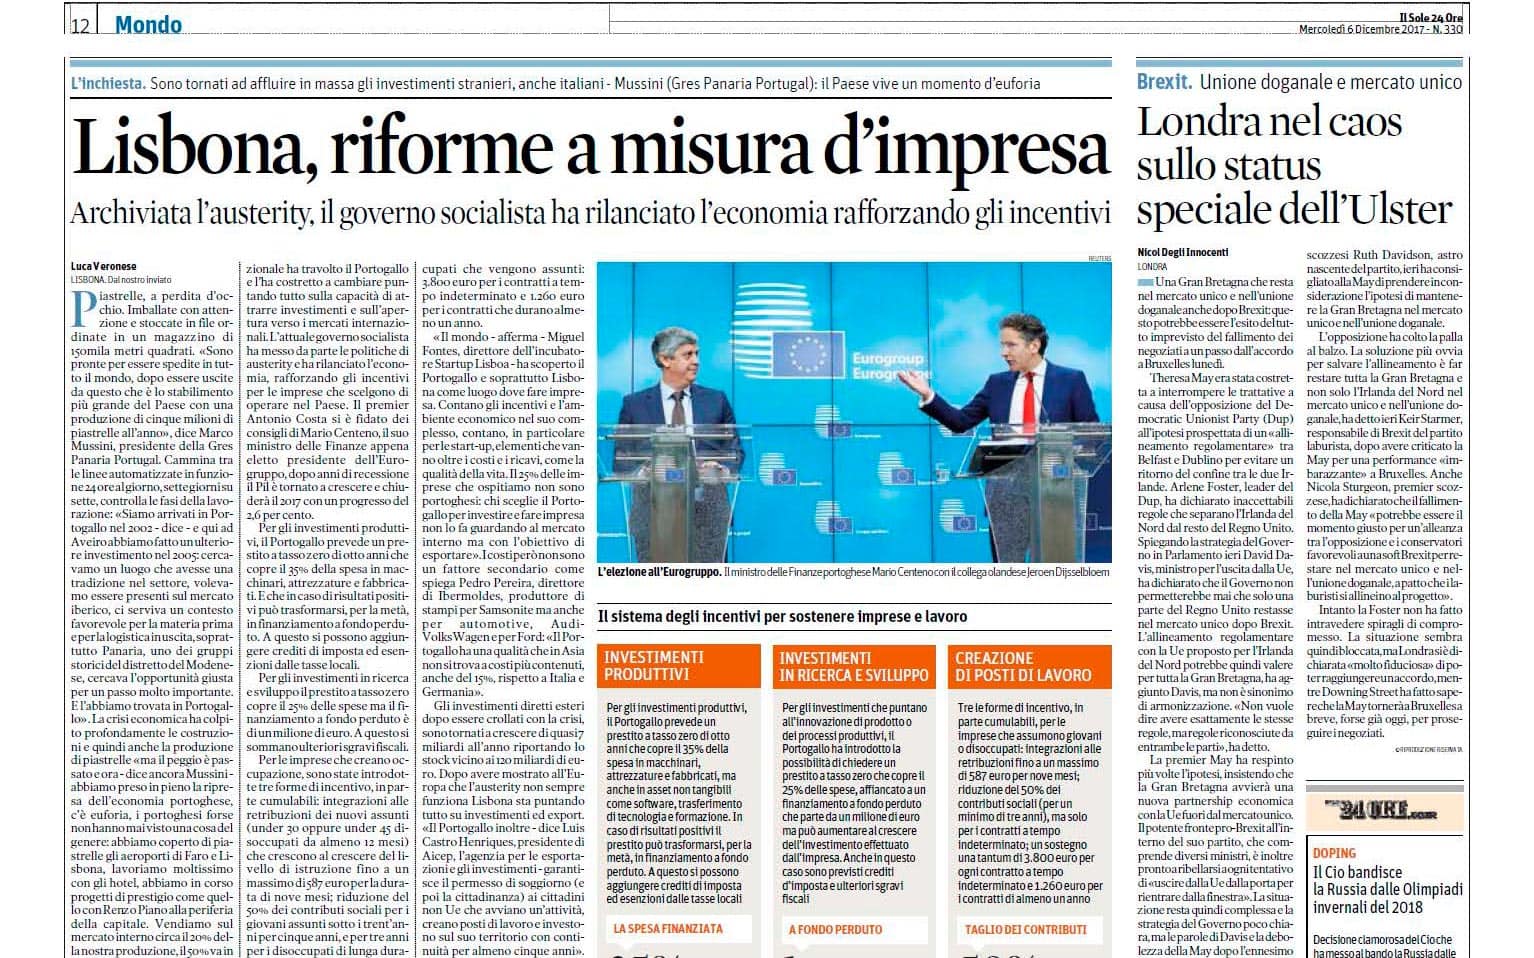 Gres Panaria Portugal is center news at italian press